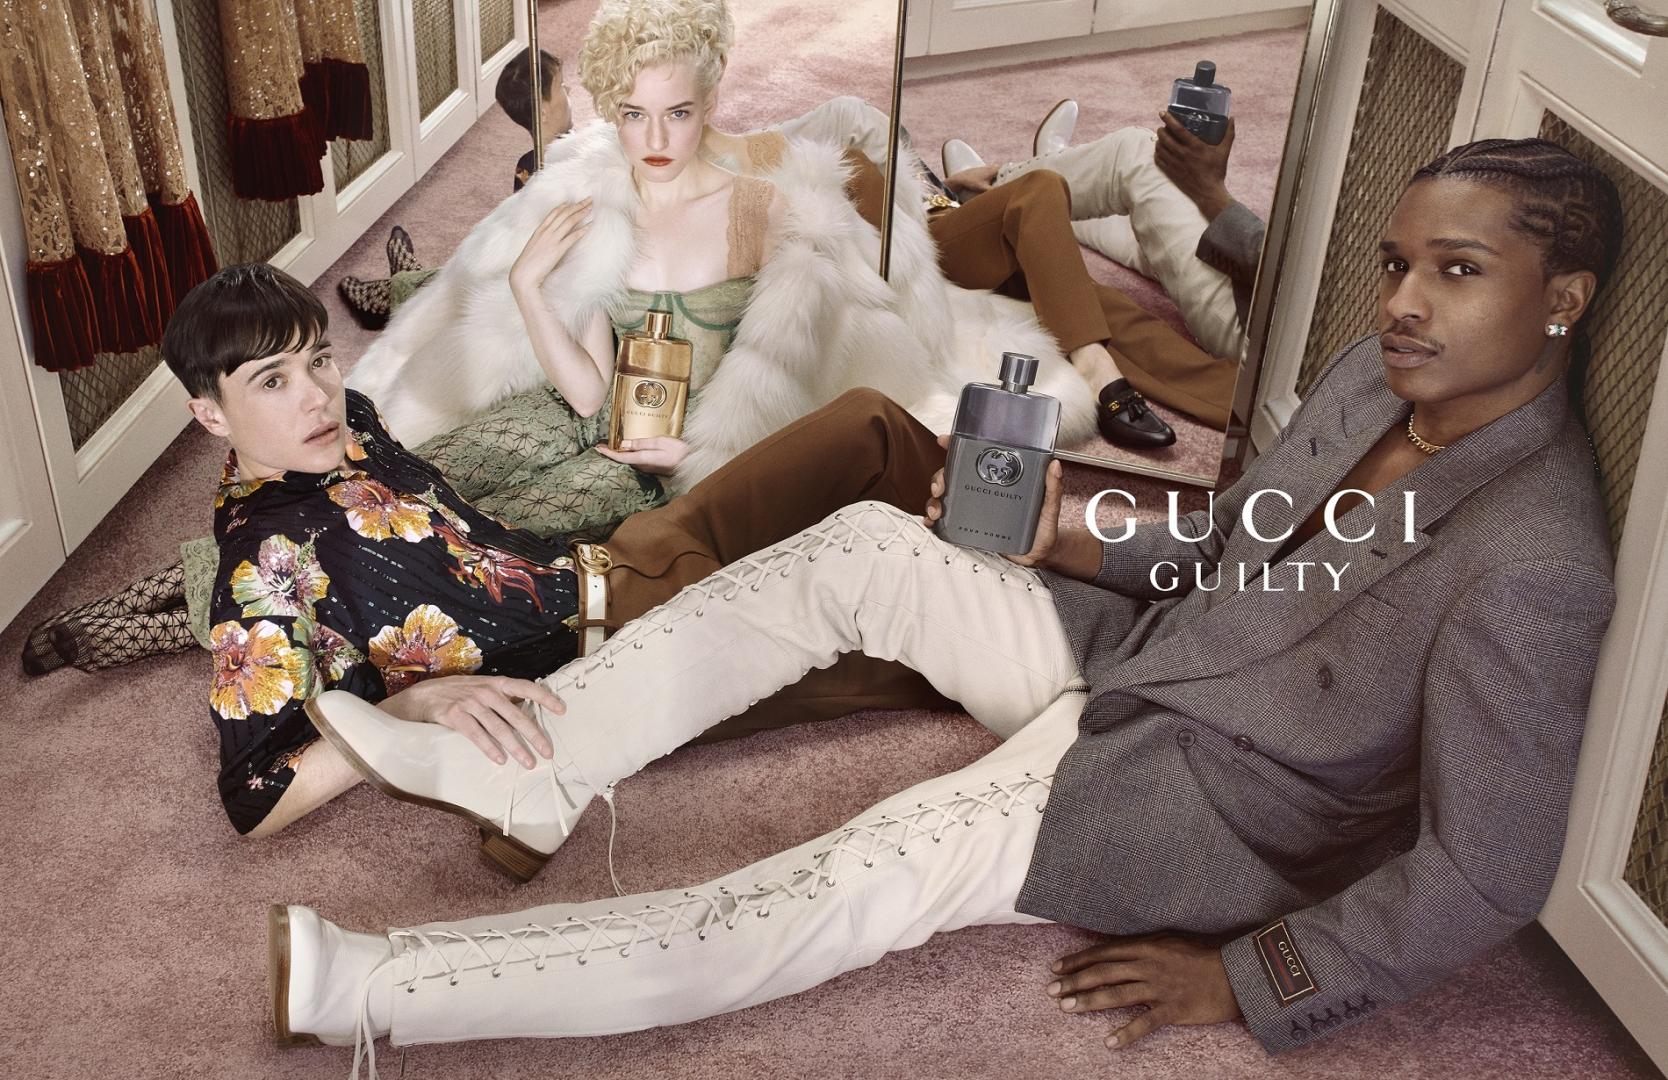 Gucci Guilty fotózáson Page Elliot, Julia Garner és Asap Rocky